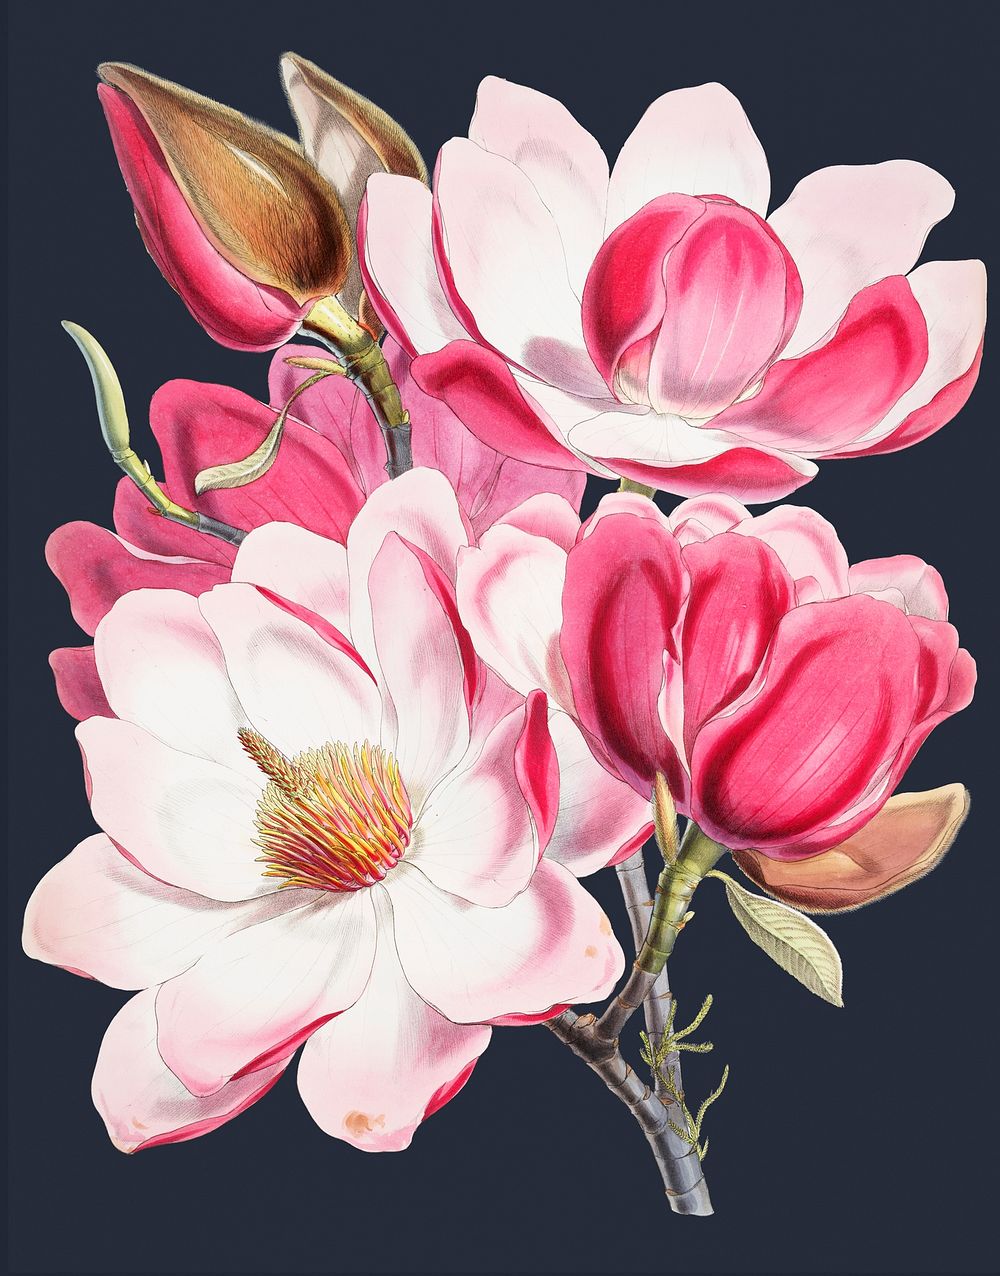 Vintage Illustration of Campbell's magnolia.